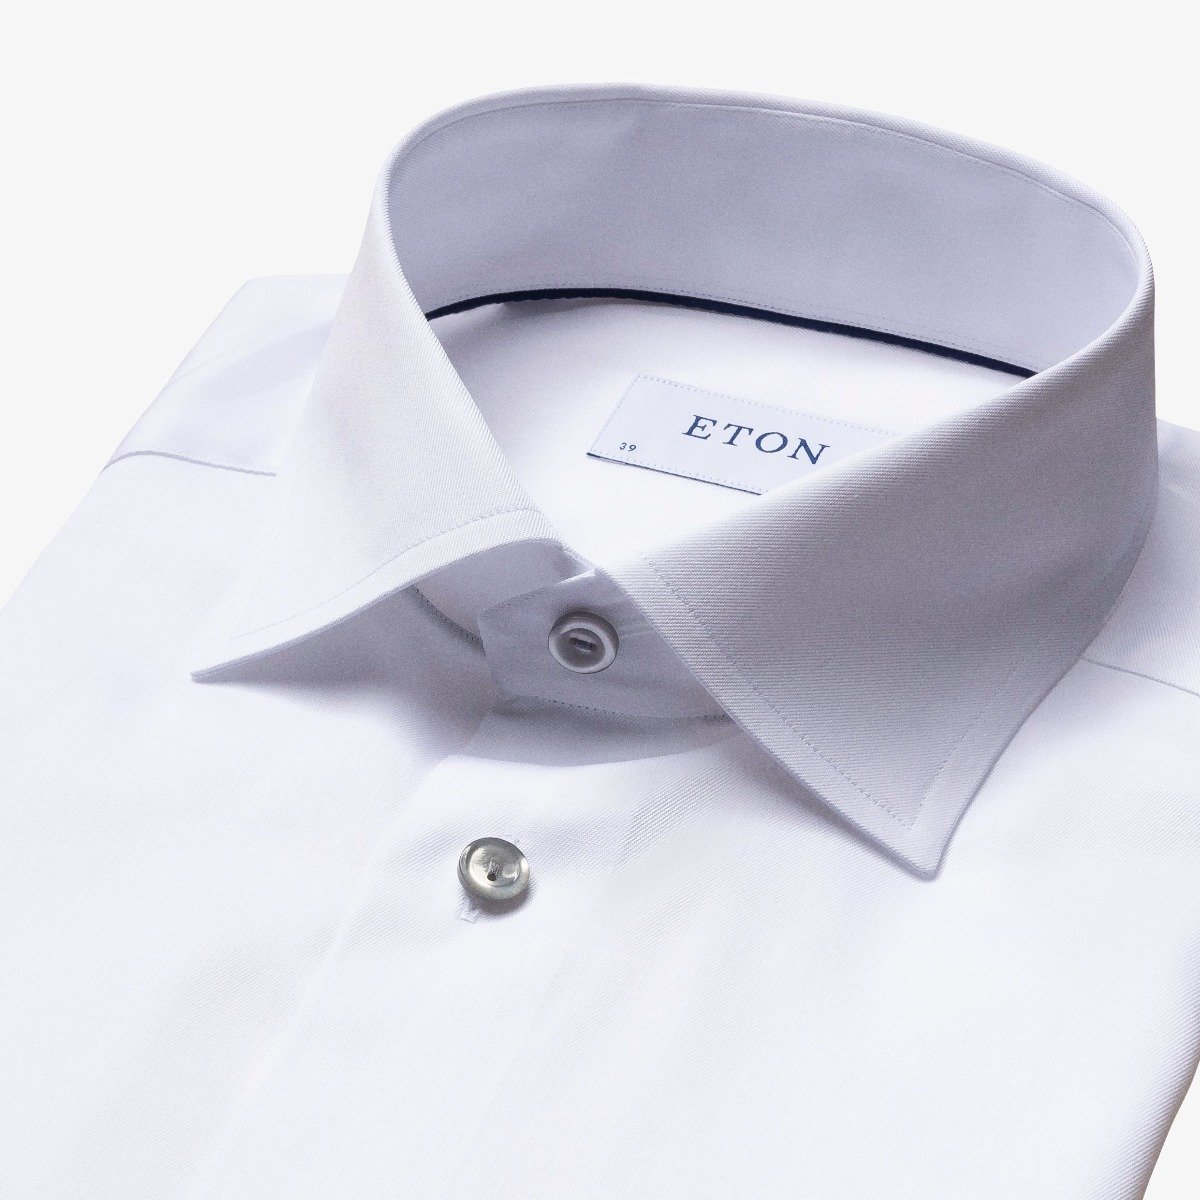 Eton white slim fit signature twill men's dress shirt - Grey buttons